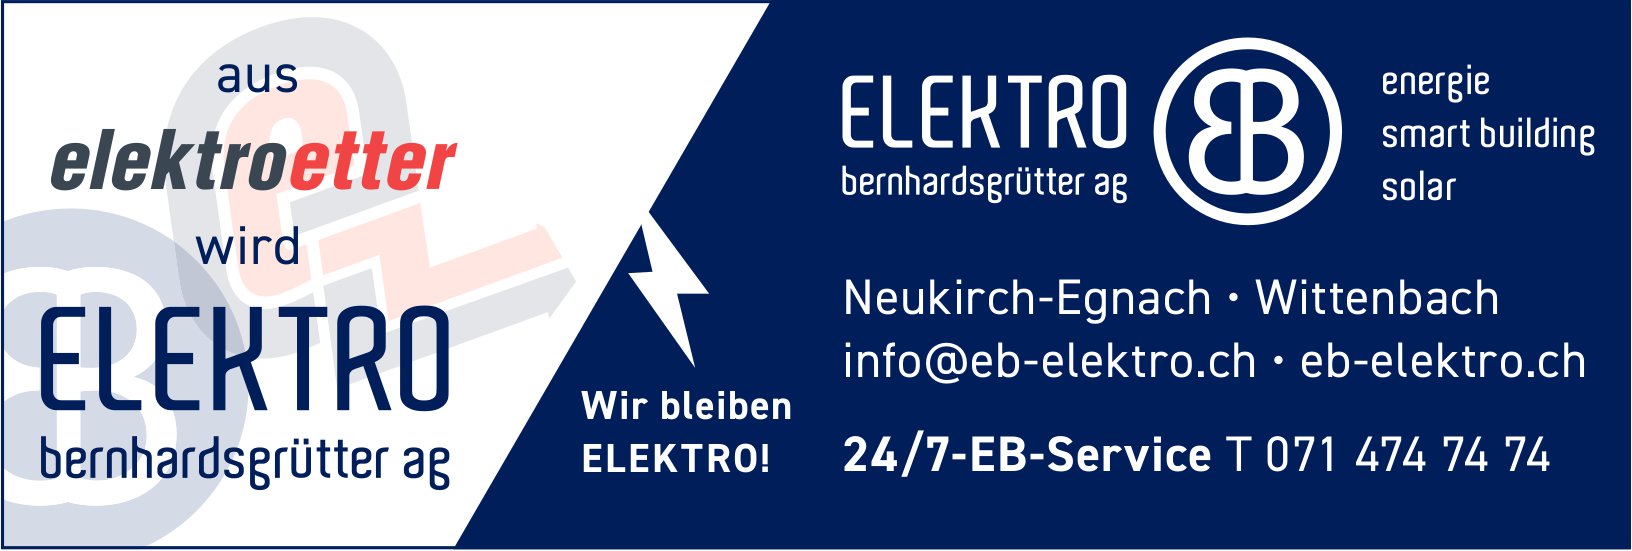 ELEKTRO bernhardsprütter ag, Wittenbach - energie smart building solar